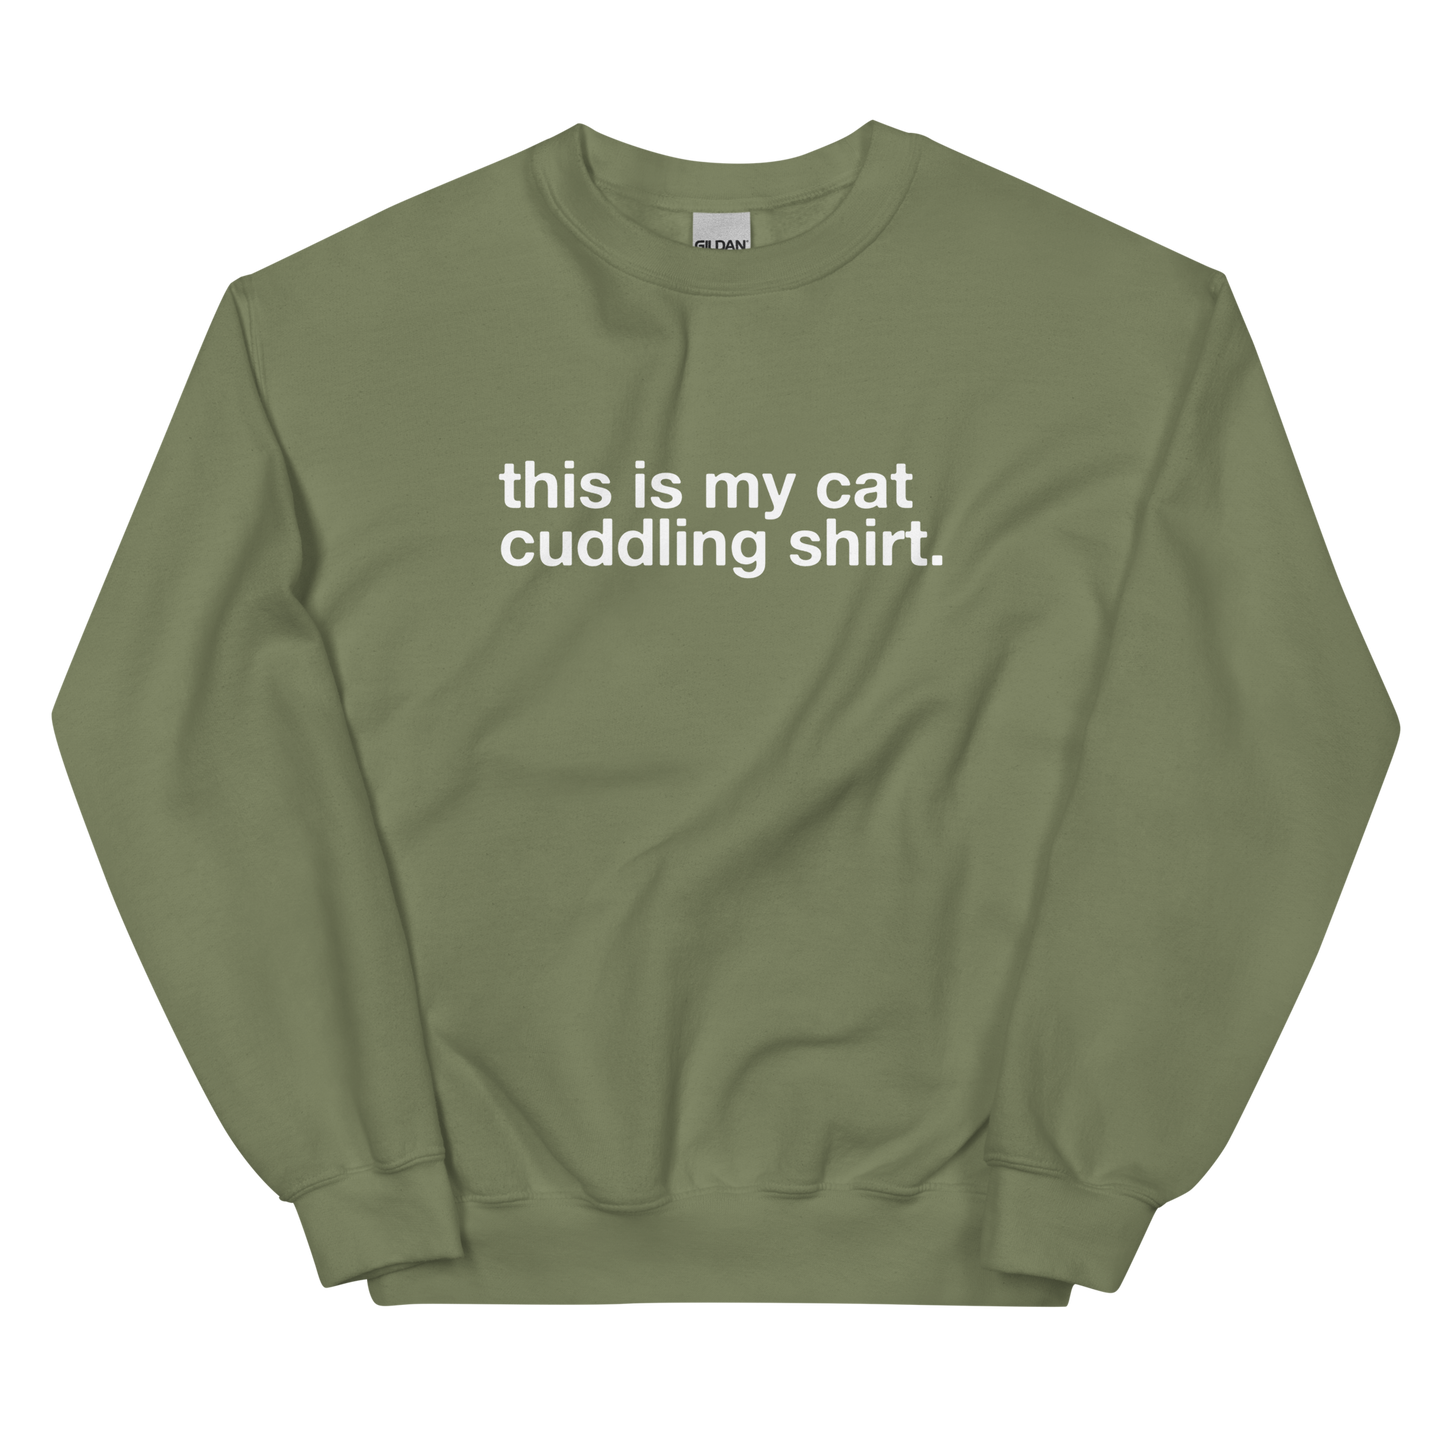 cat cuddling shirt. - Unisex Crewneck Sweatshirt